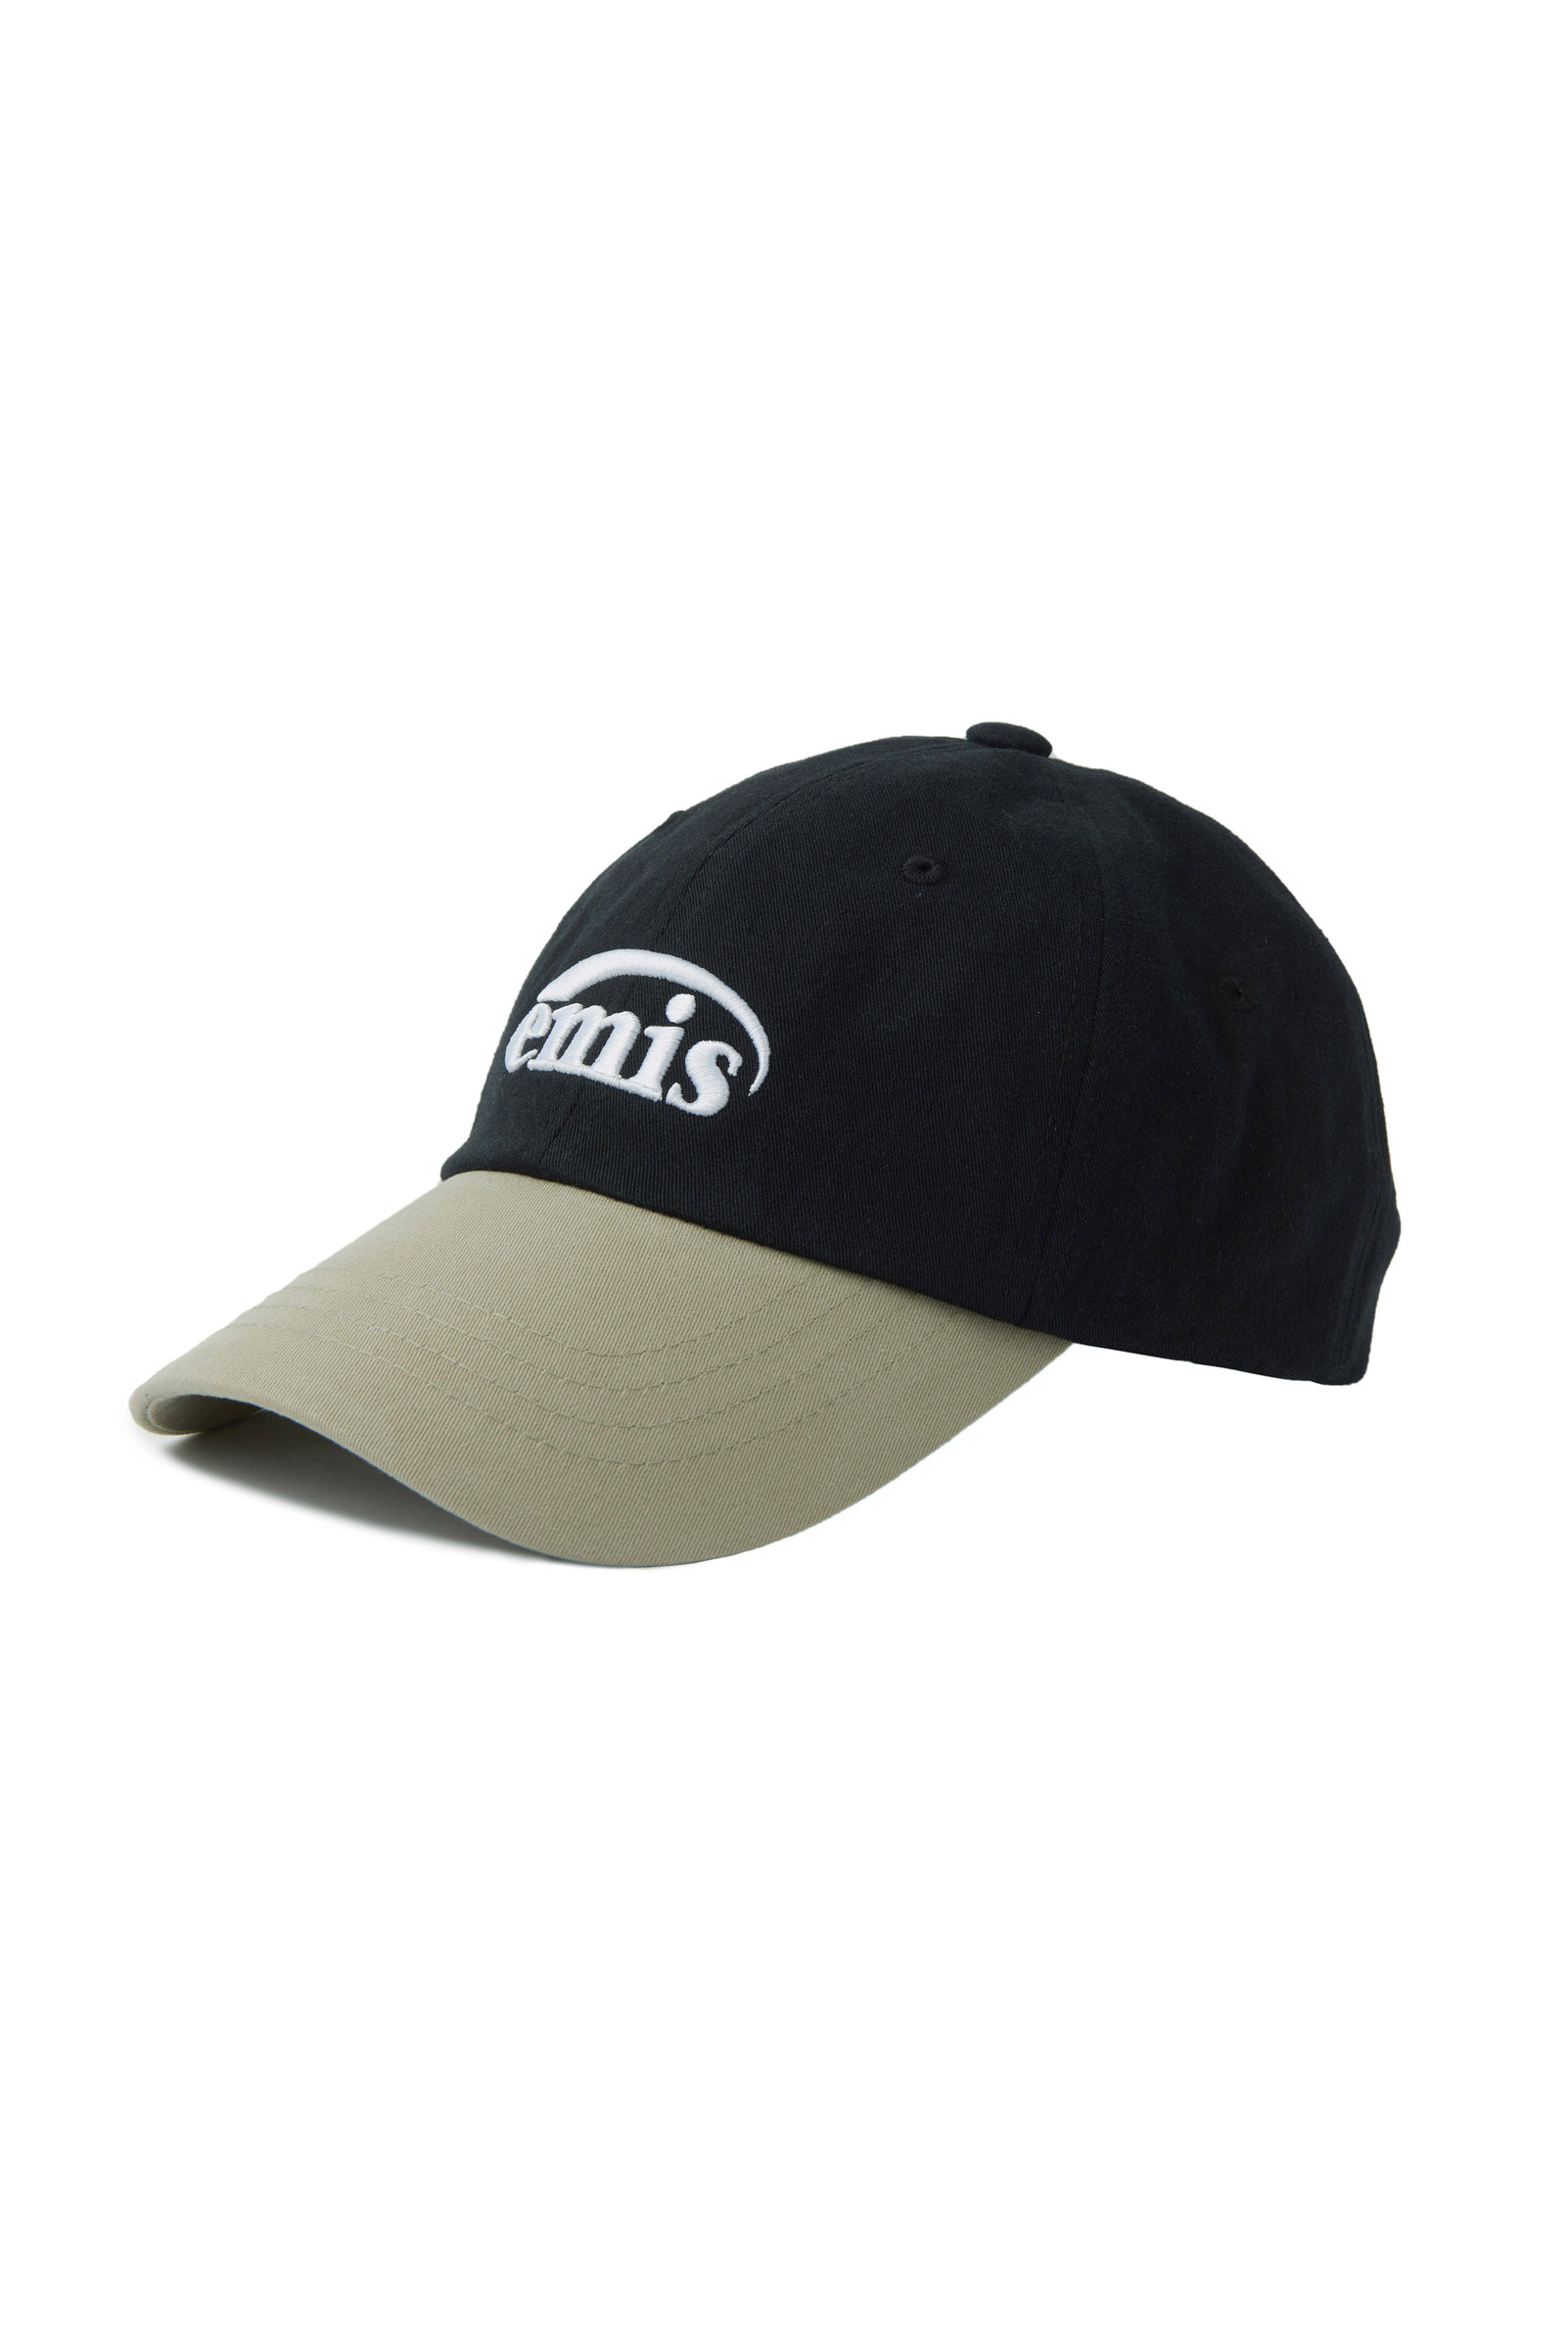 EMIS New Logo Mix Ball Cap (Beige Black)